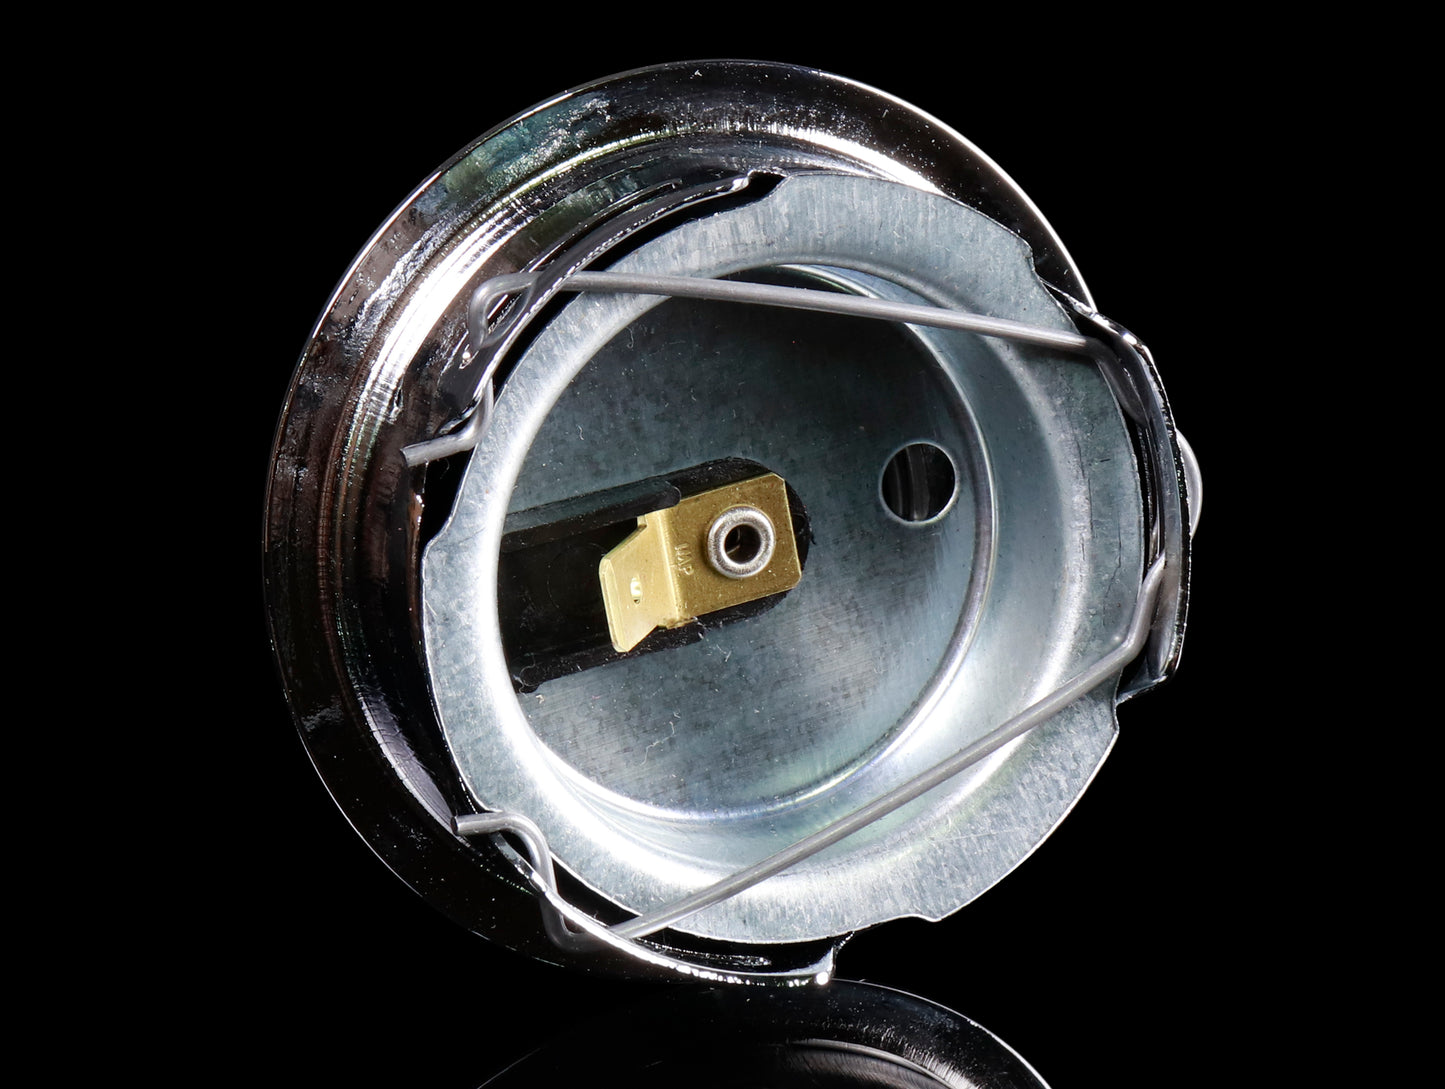 Nardi Classic Horn Button - Single Contact